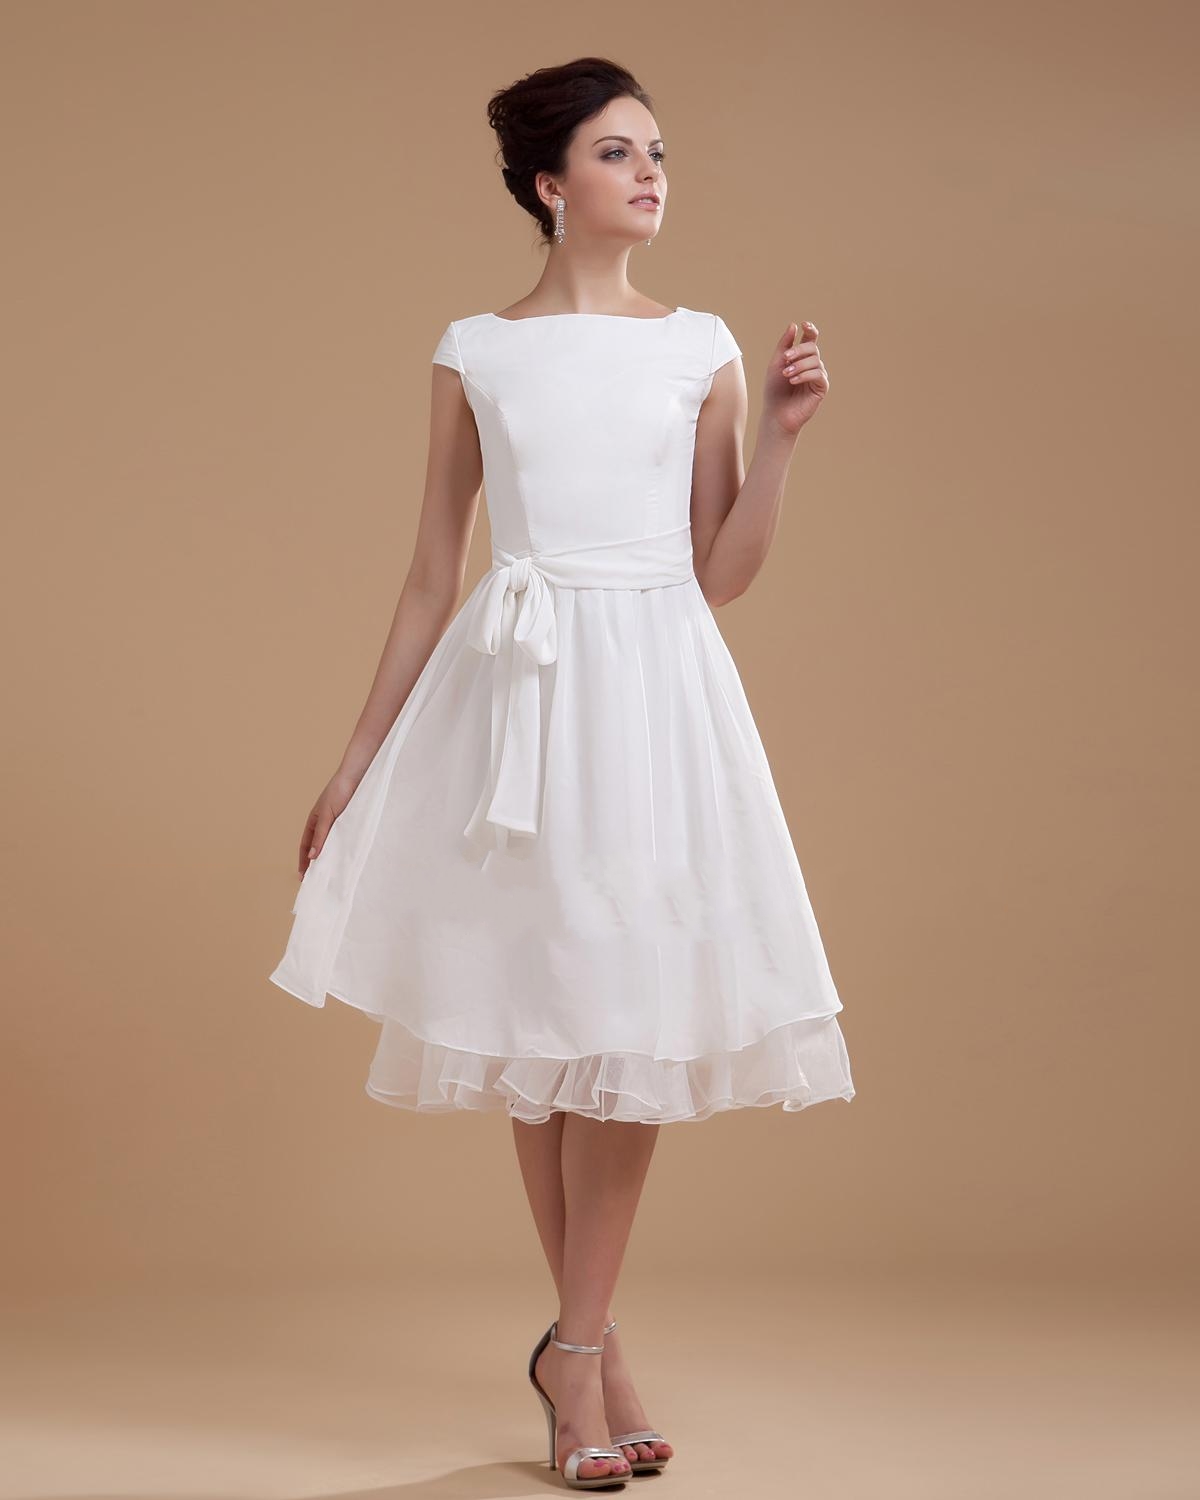 20 Cool Short Wedding Dresses - MagMent